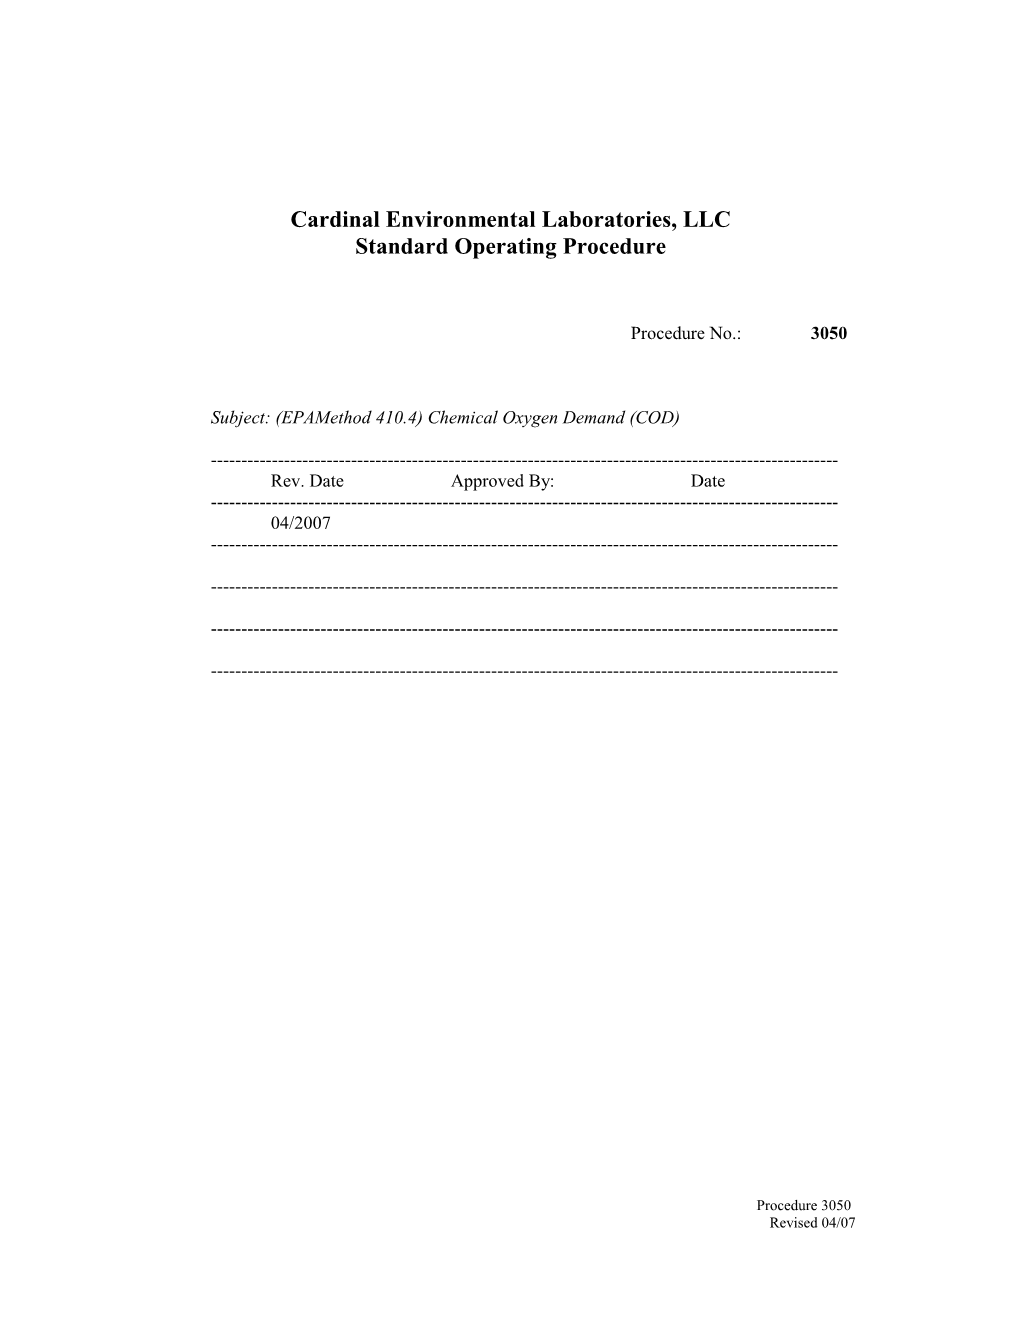 Cardinal Environmental Laboratories, LLC s1